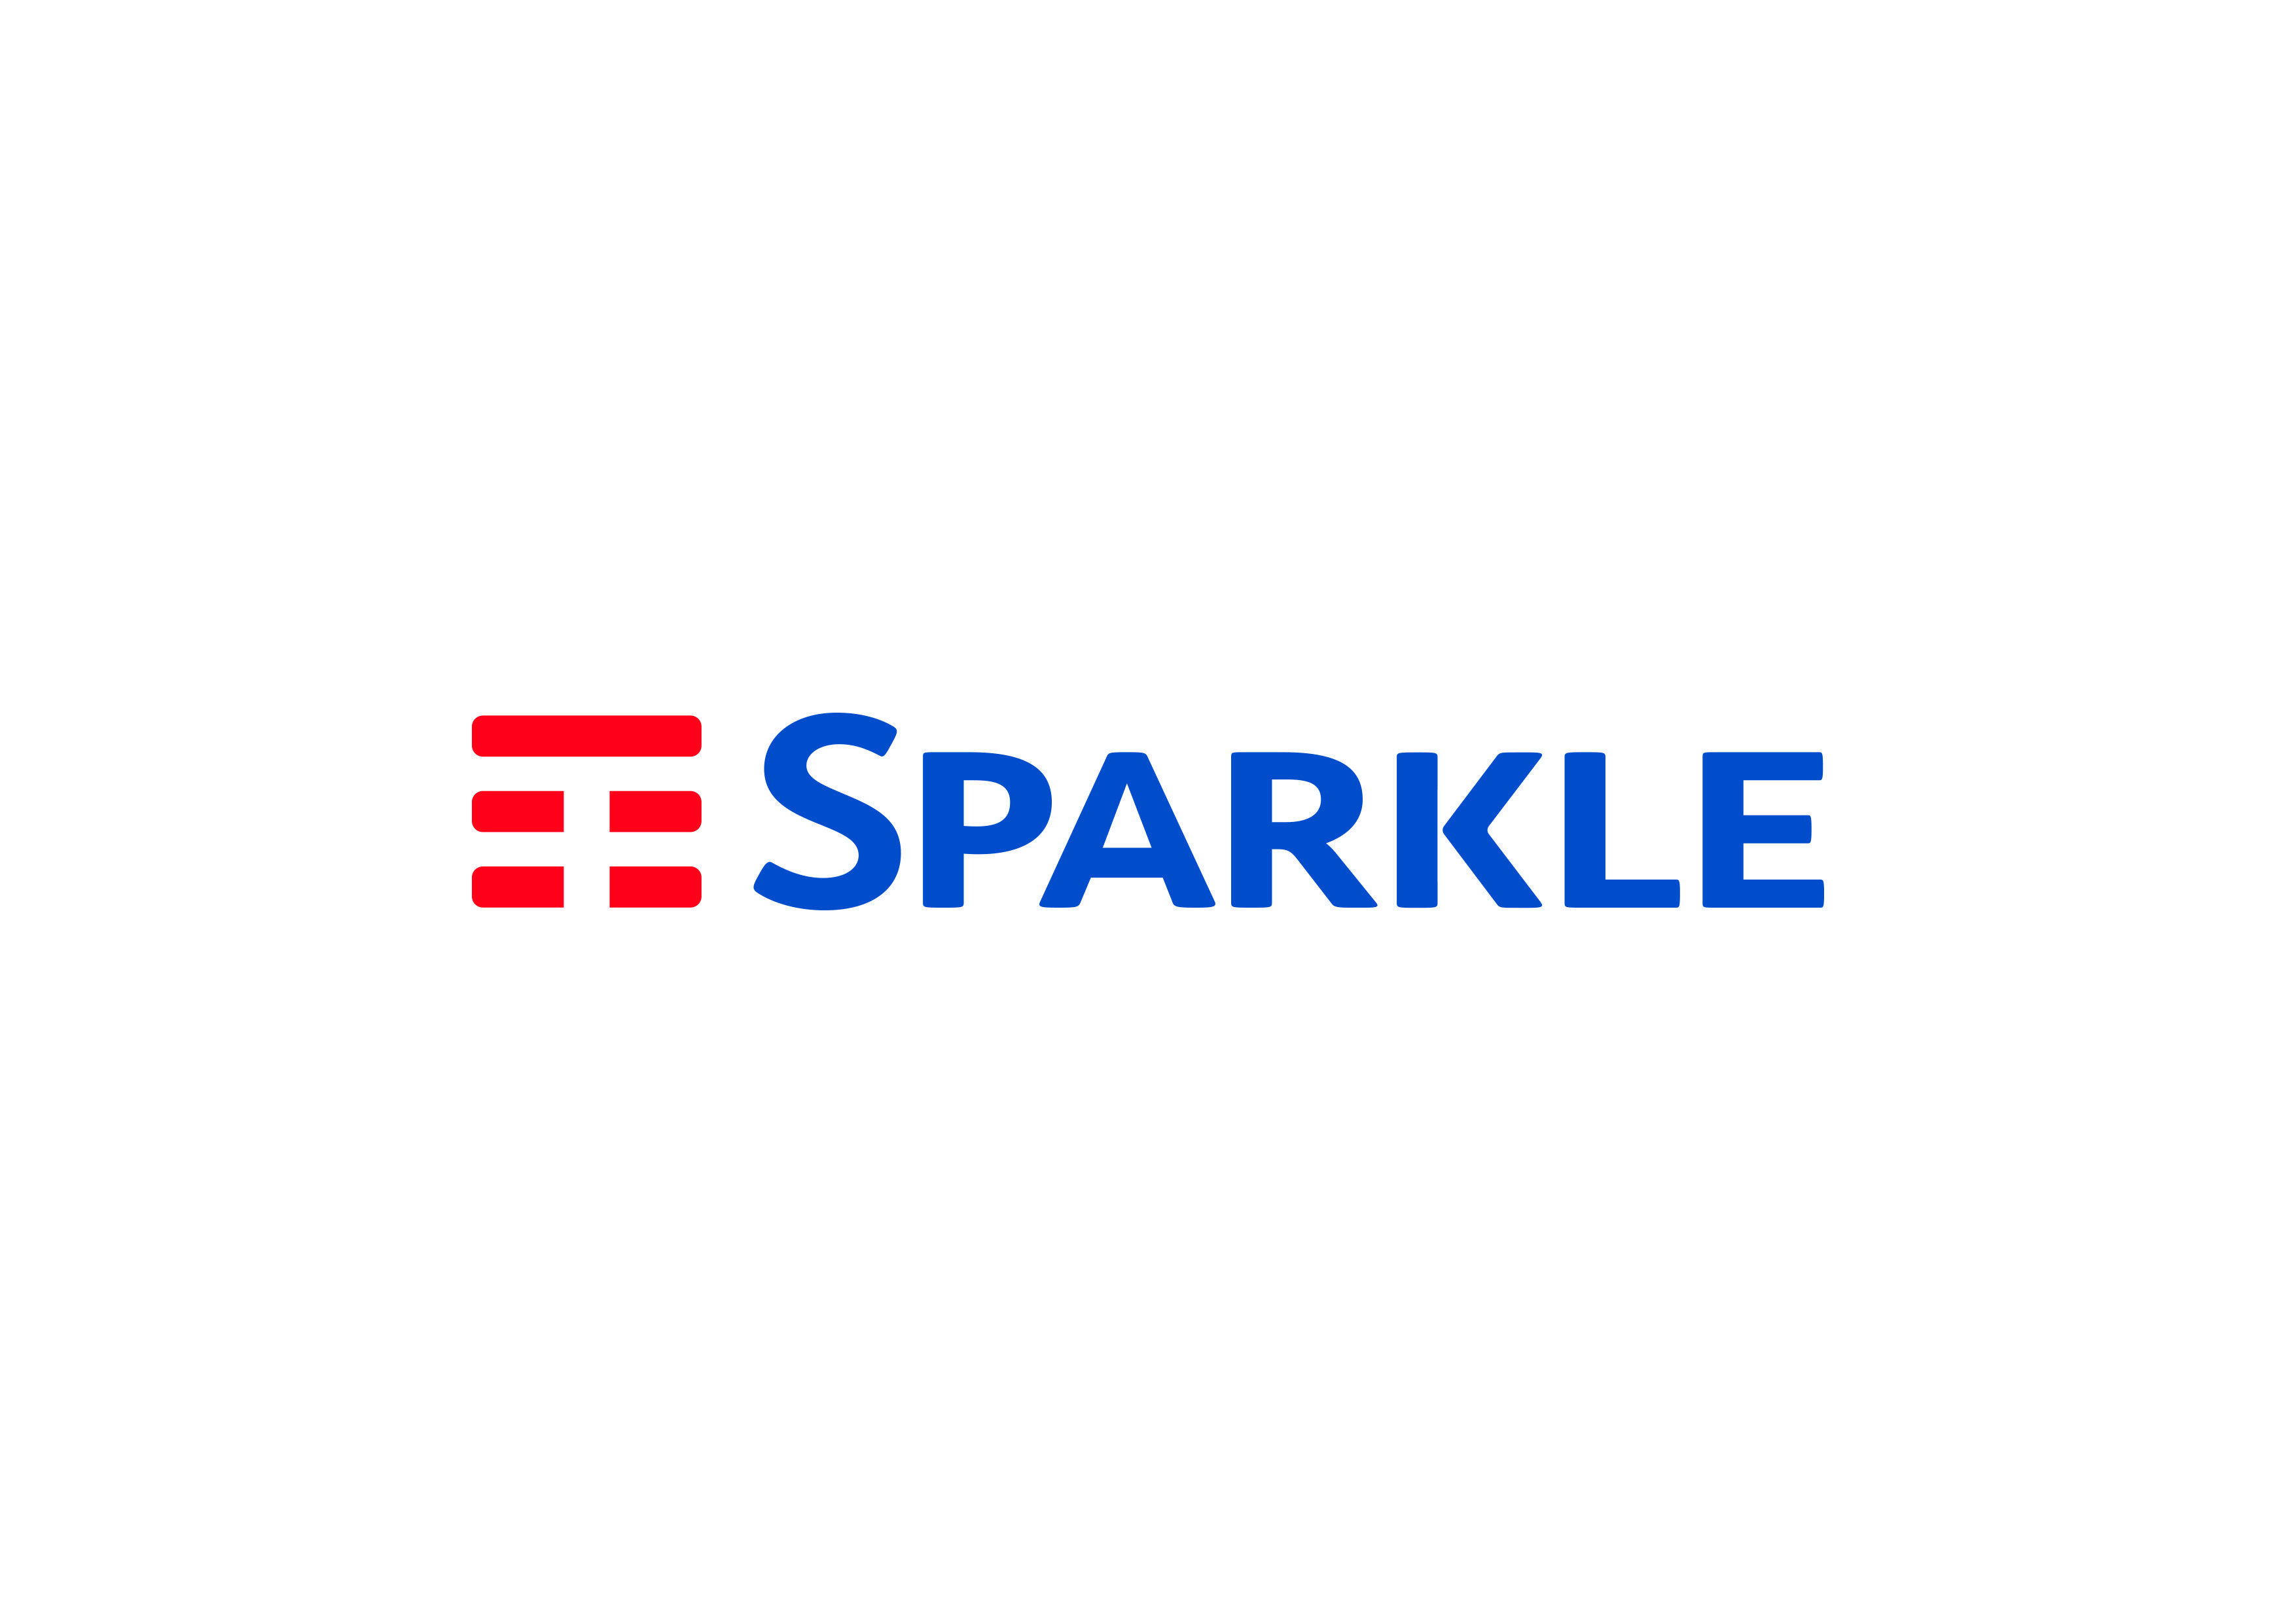 Sparkle Logo - SPARKLE